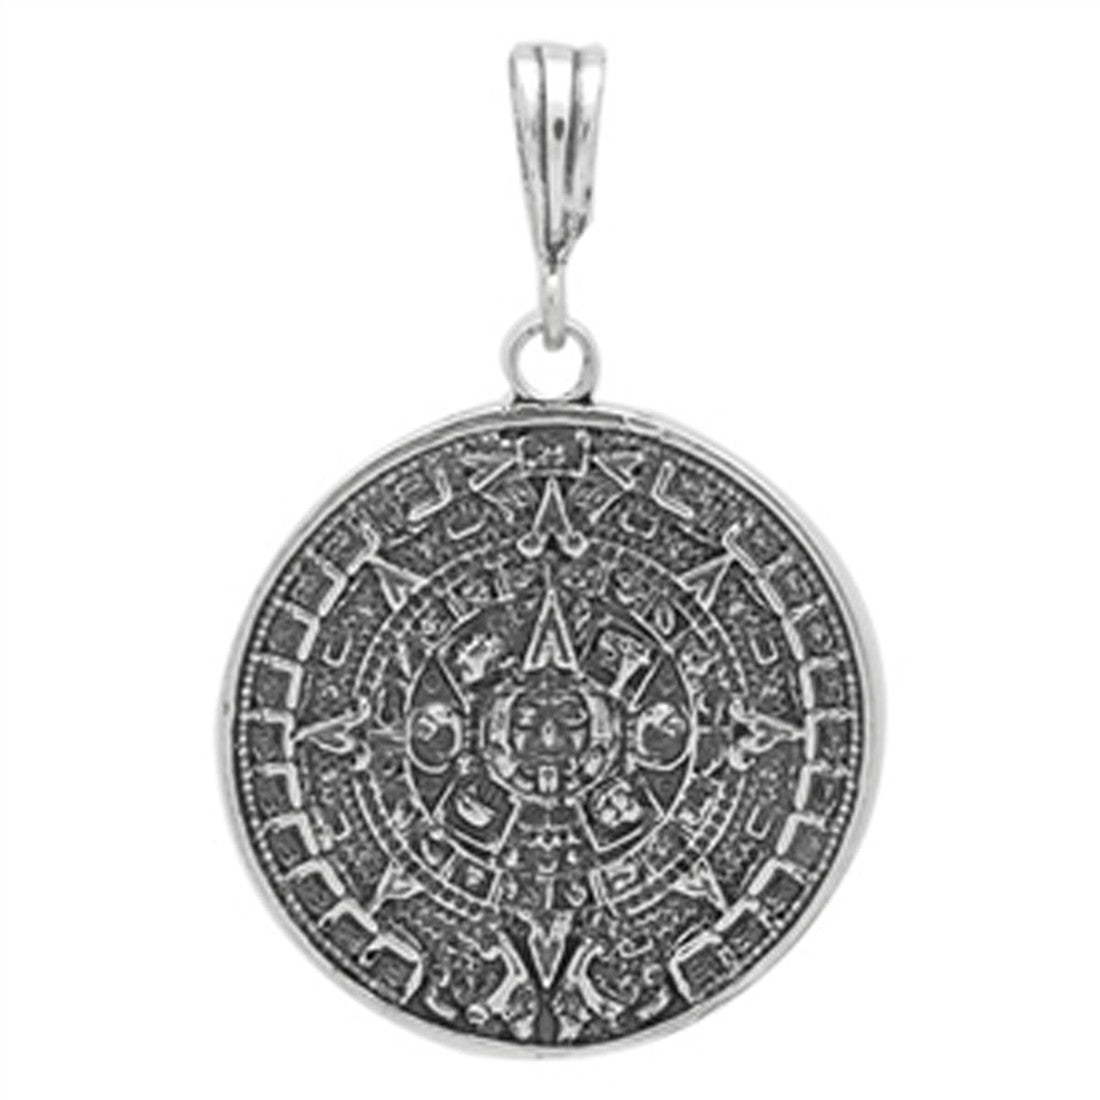 Aztec Calendar Pendant  925 Sterling Silver Oxidize charm 28mm Long-Blue Apple Jewelary